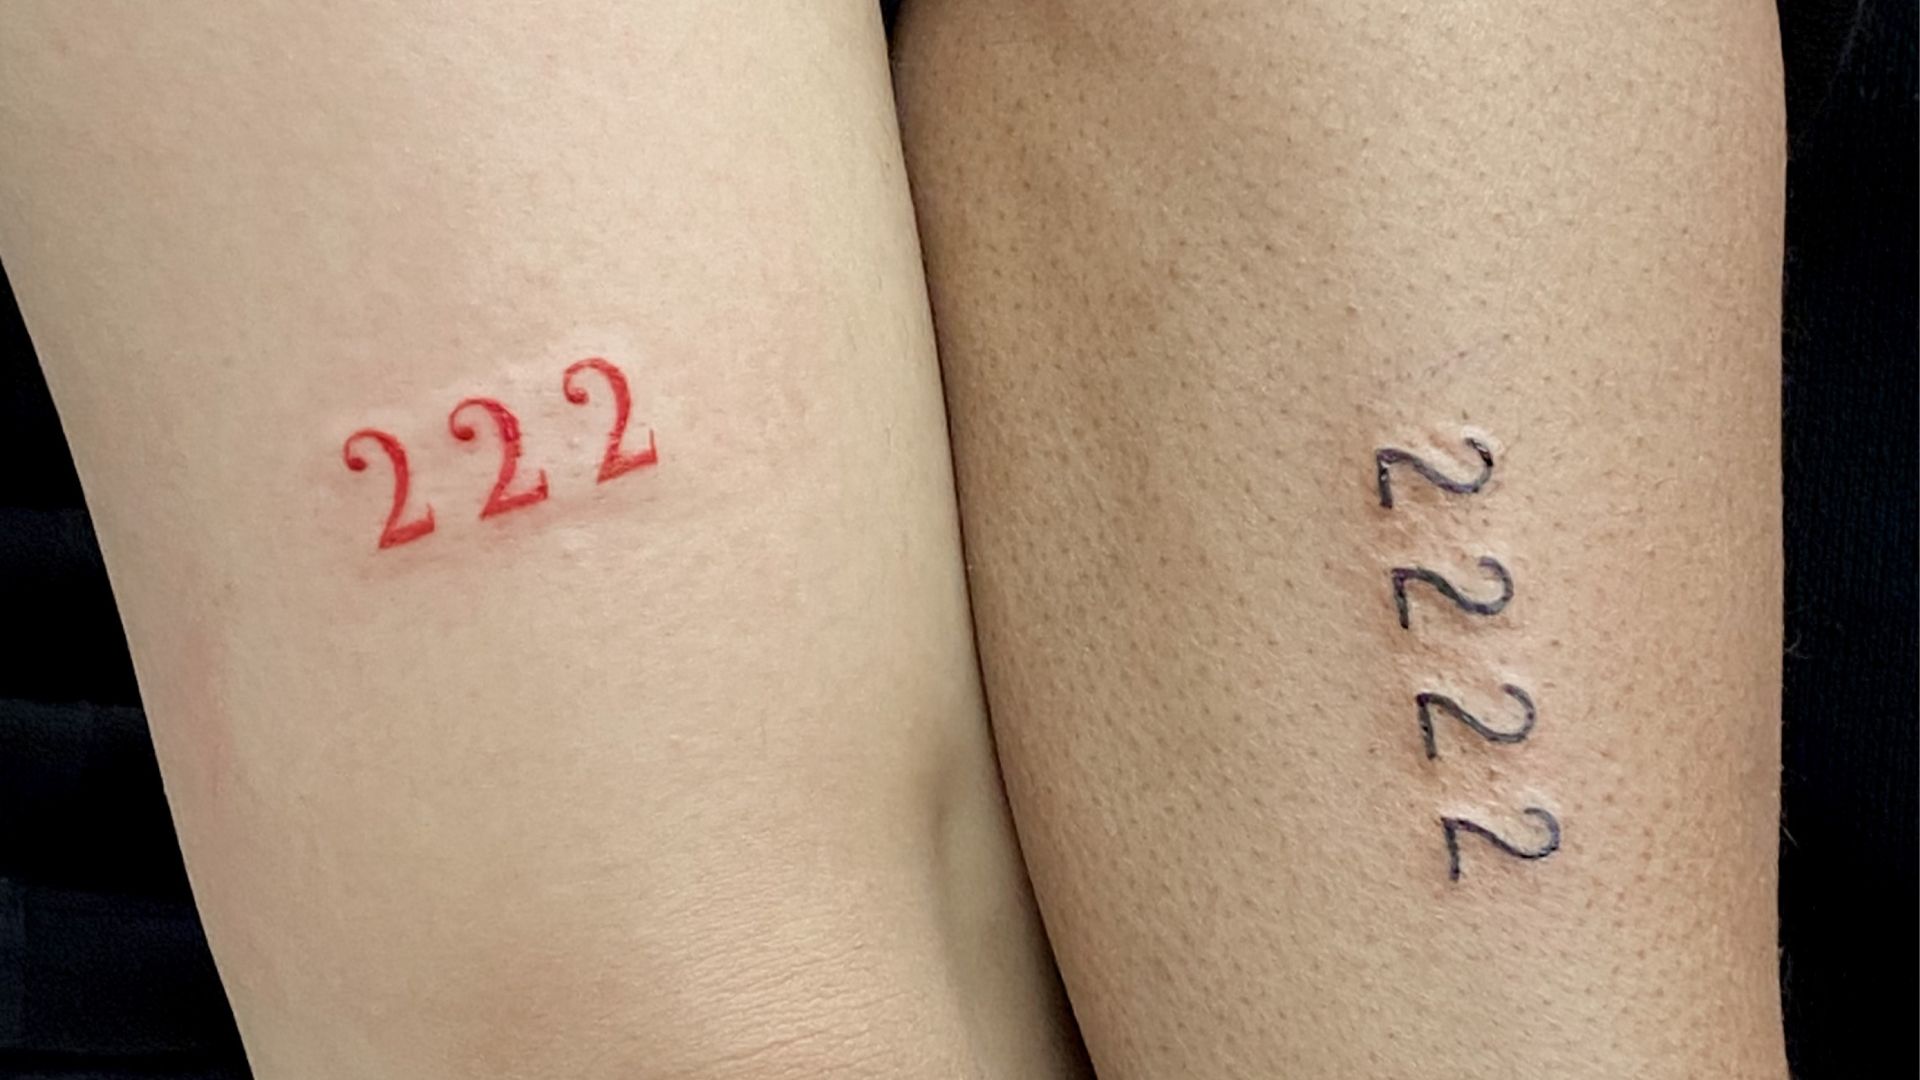 aroundblacks Instagram photo Angel Number Tattoo  Number tattoos  Writing tattoos Tattoos with meaning